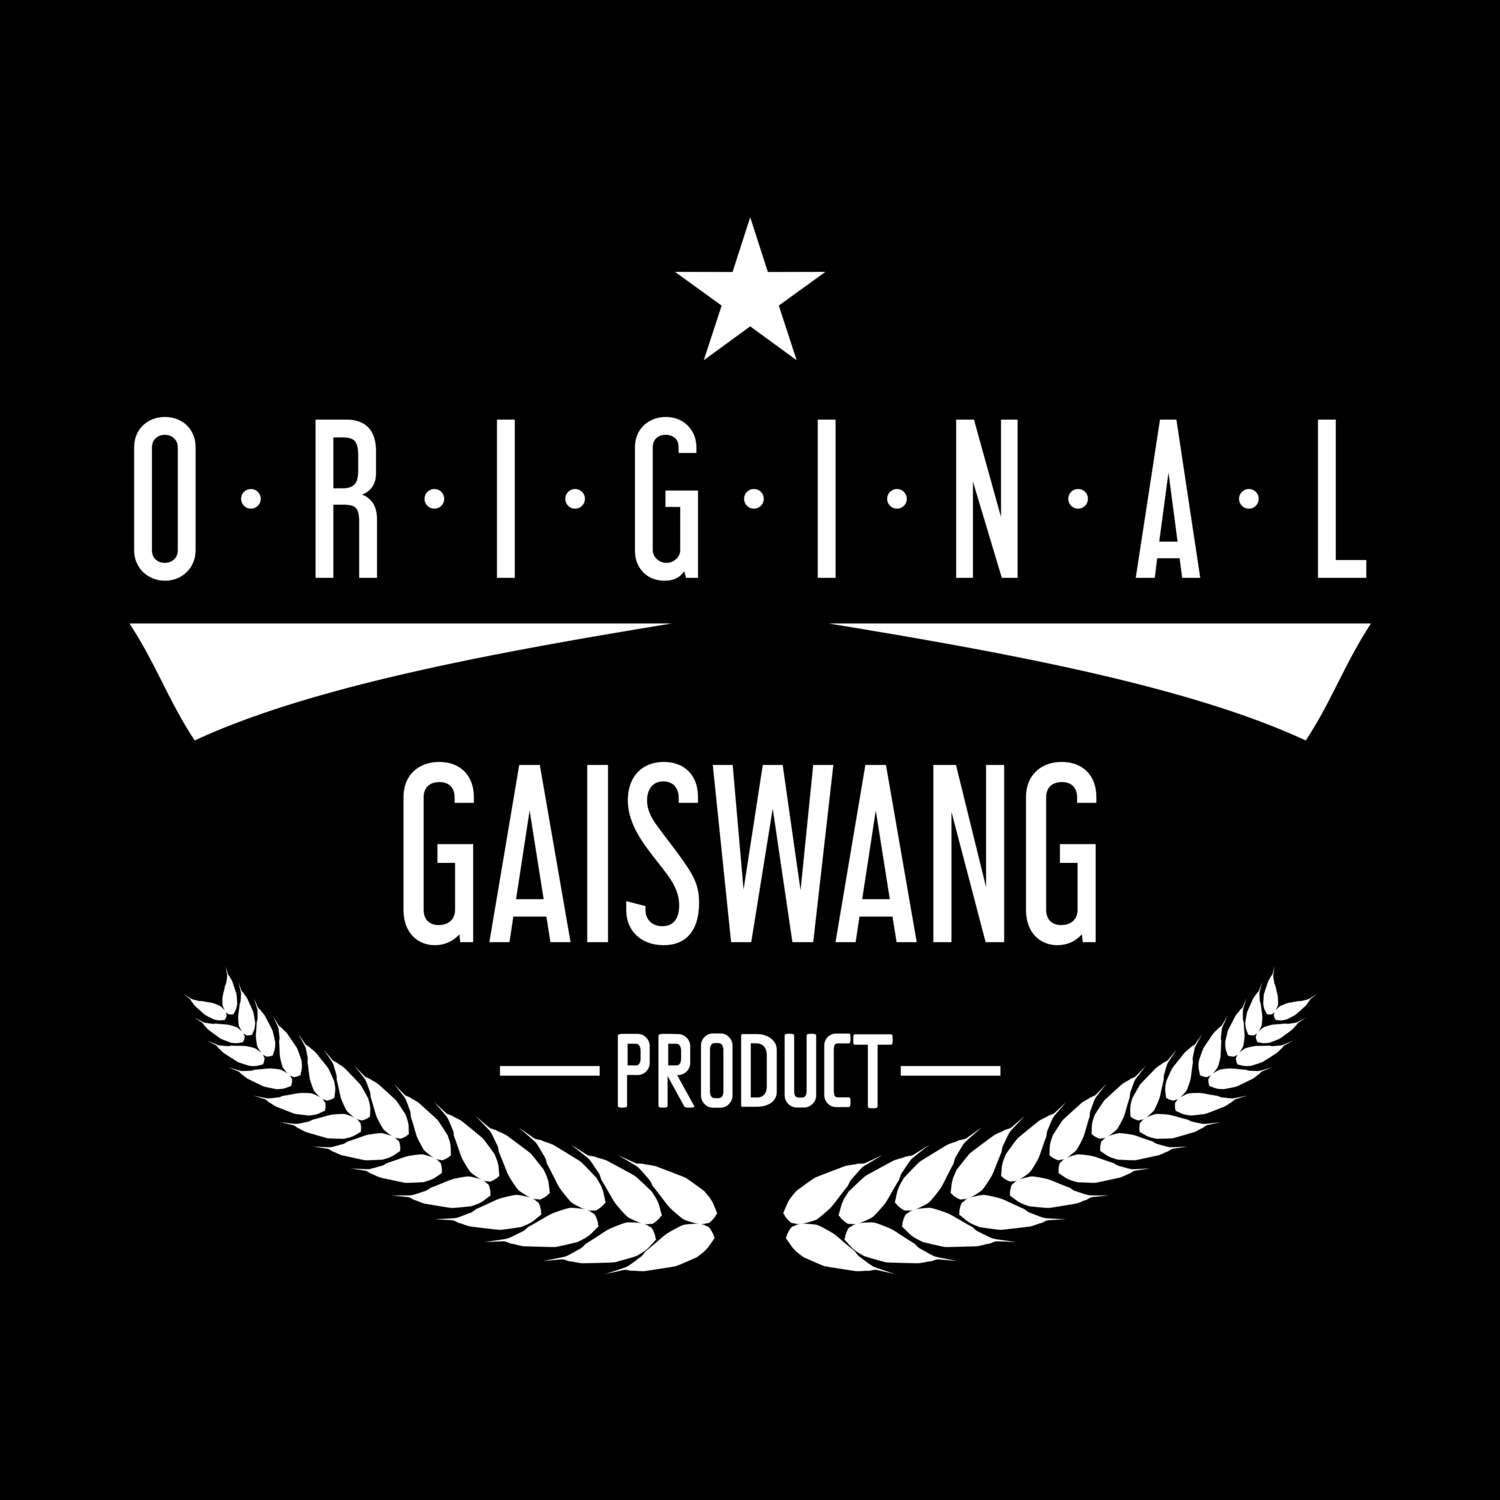 Gaiswang T-Shirt »Original Product«